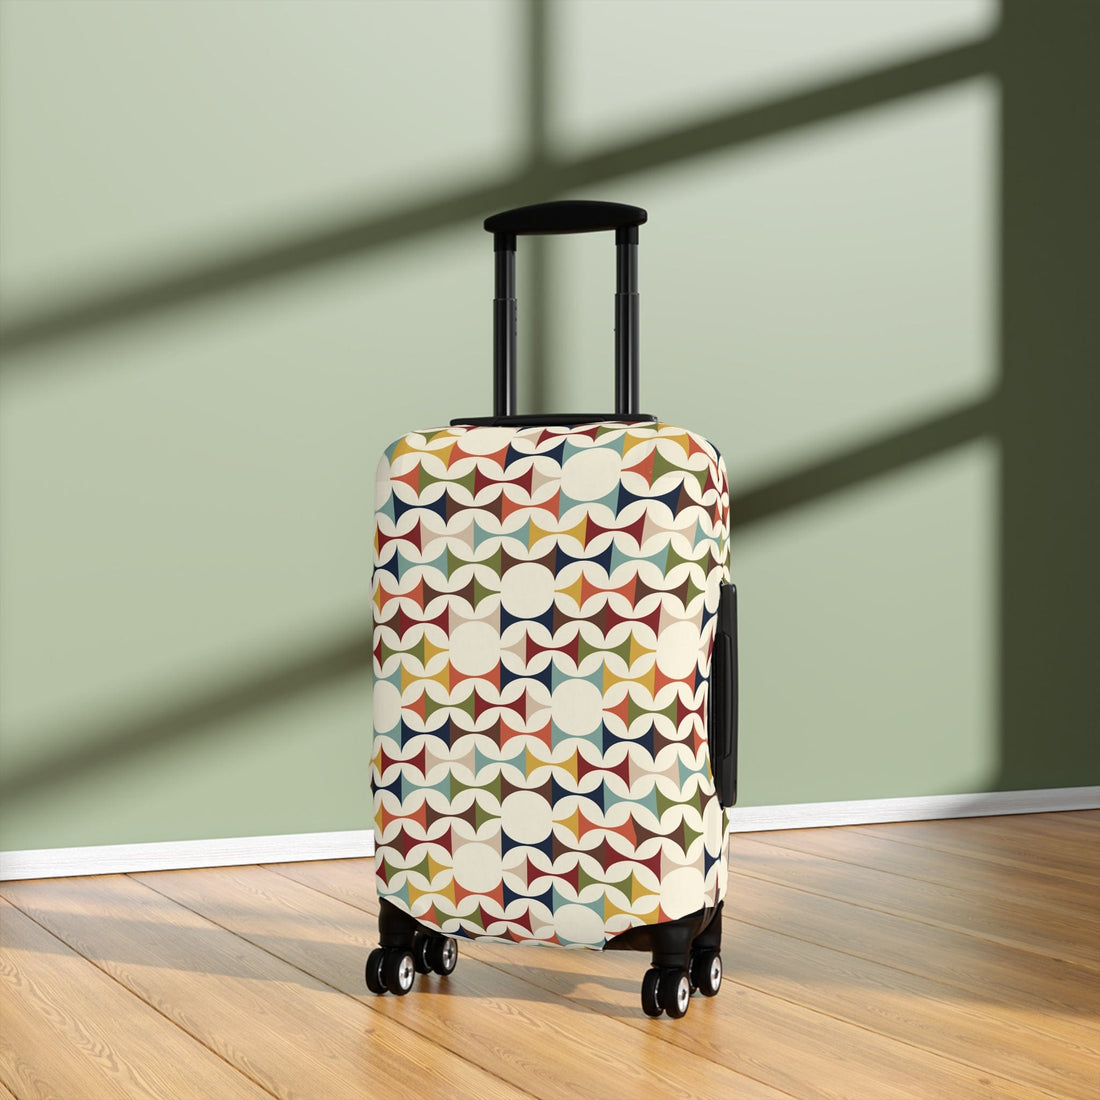 Kate McEnroe New York Mid Century Modern Geometric Luggage Cover, 50s MCM Cream Teal Mustard, Retro Suitcase SkinLuggage Covers30403875115302443989